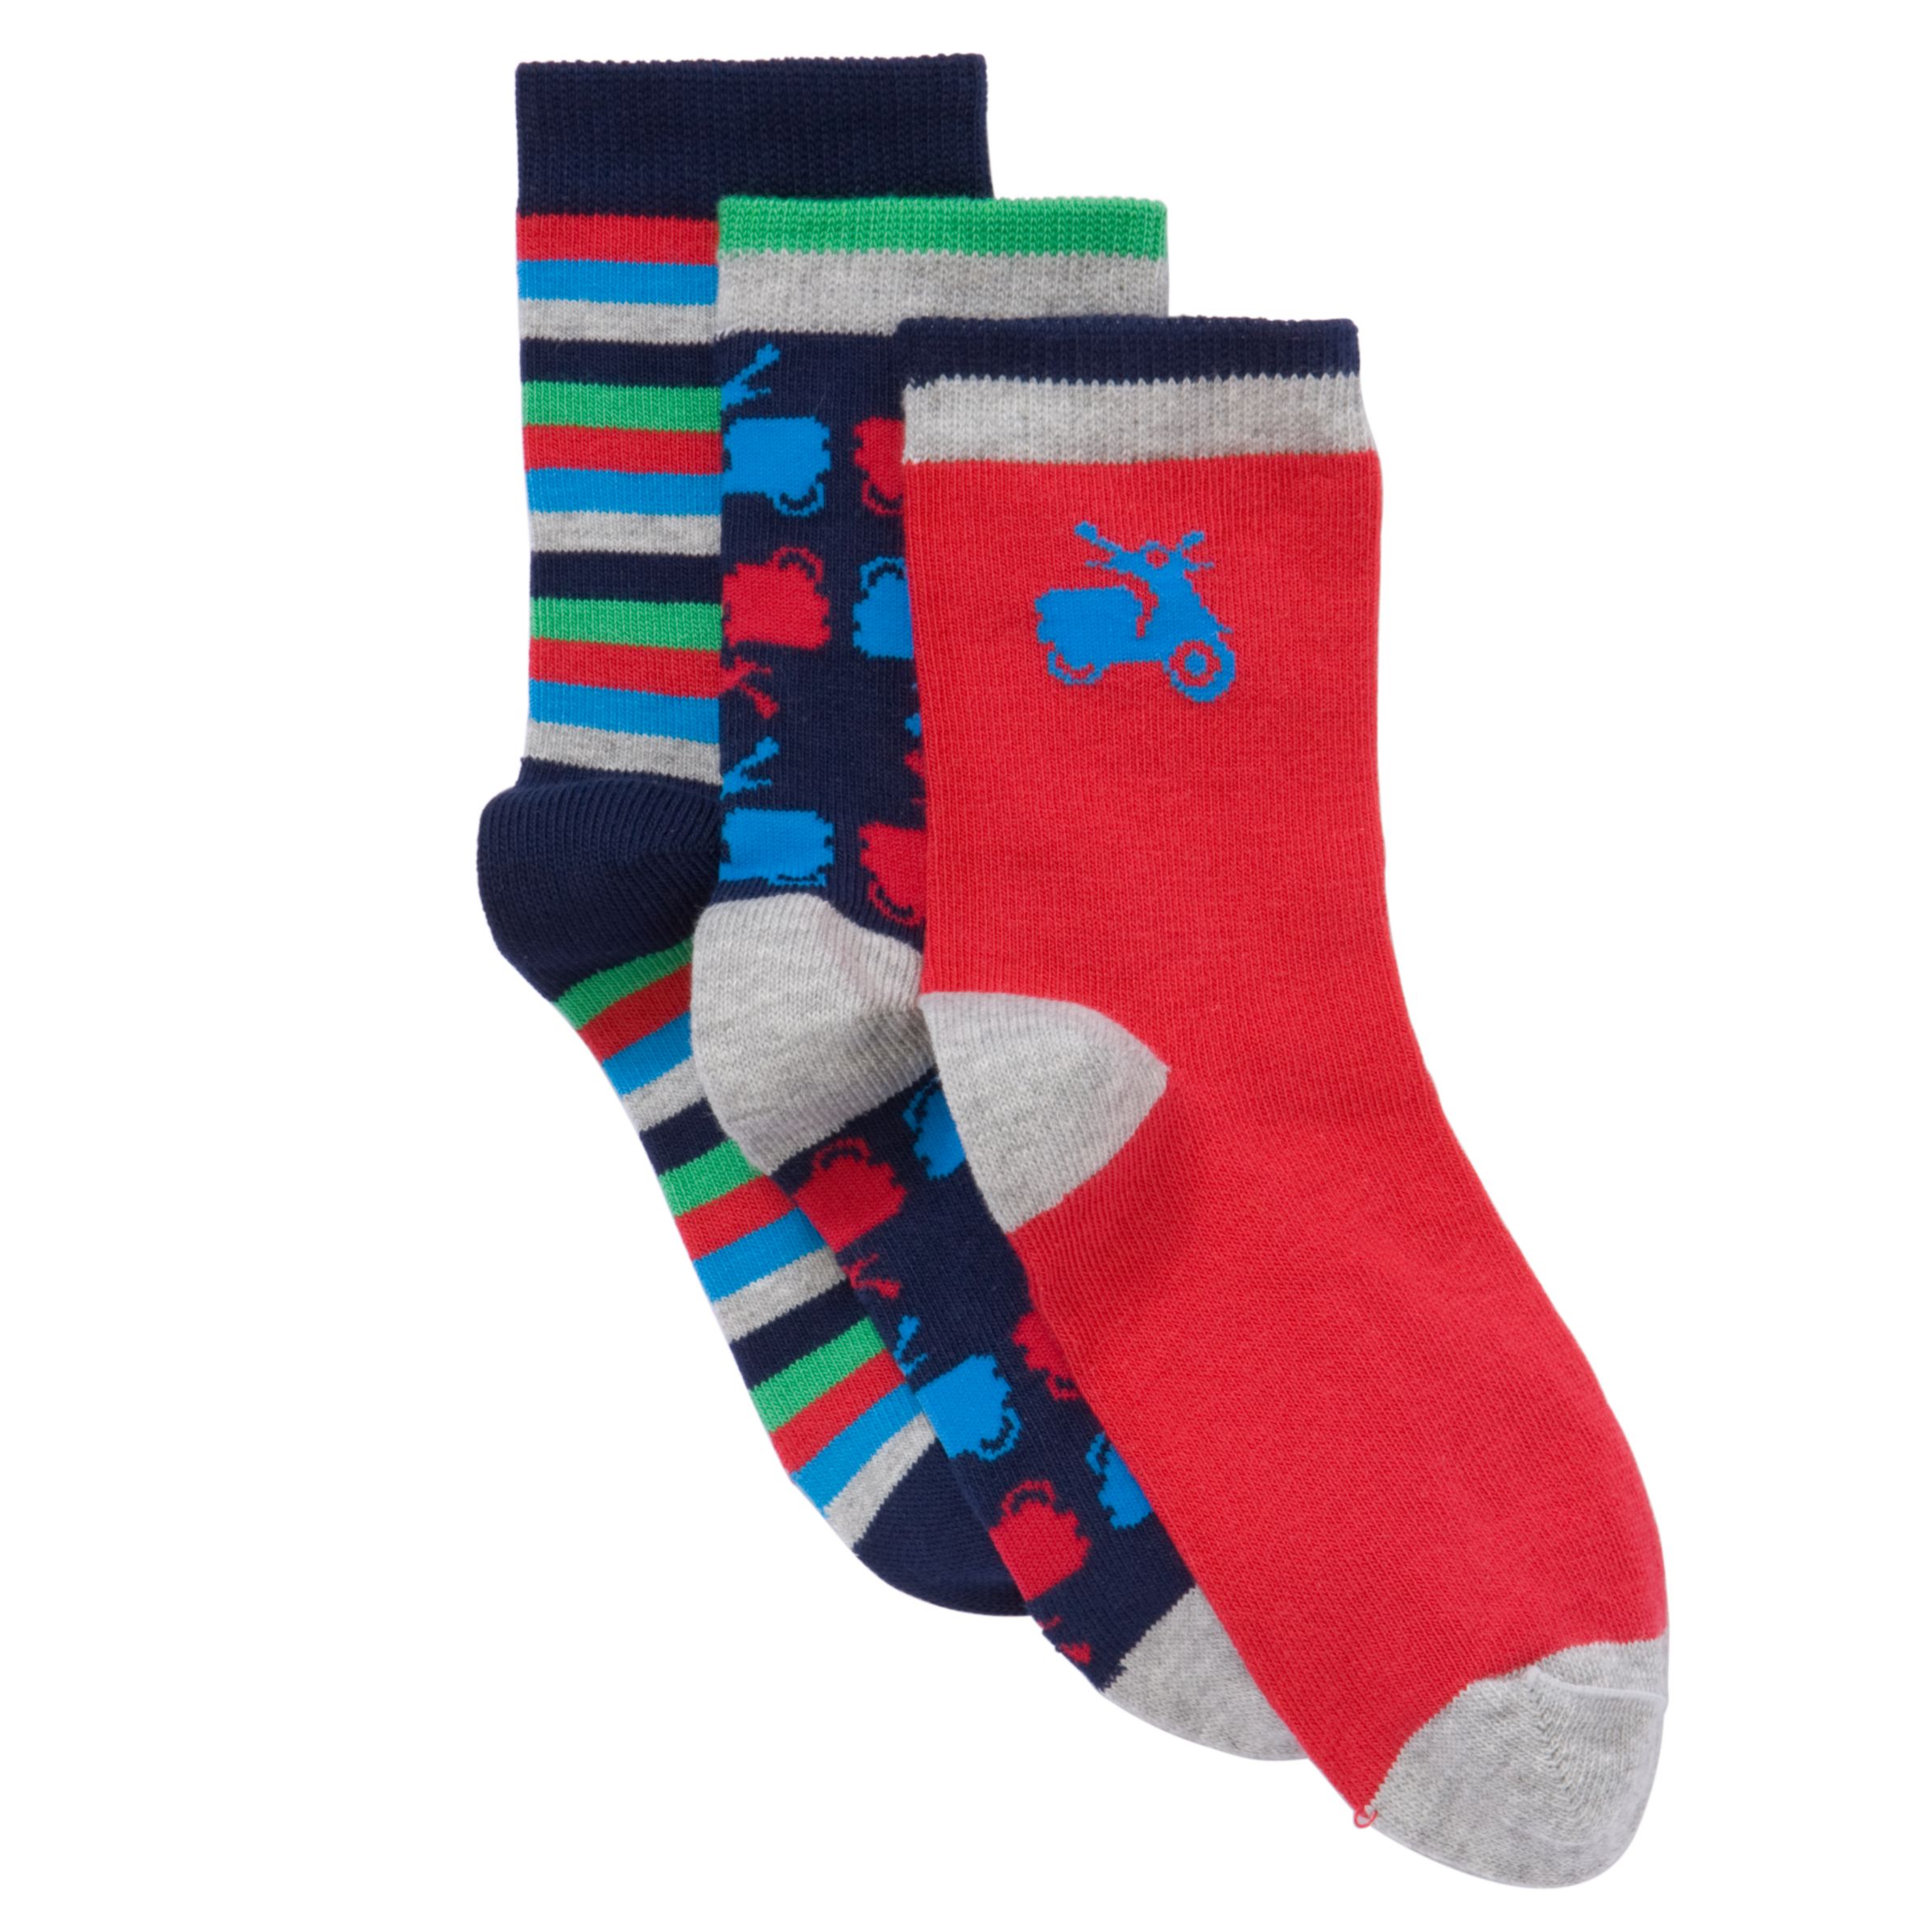 John Lewis Boy Scooter Socks, Pack of 3, Red/blue